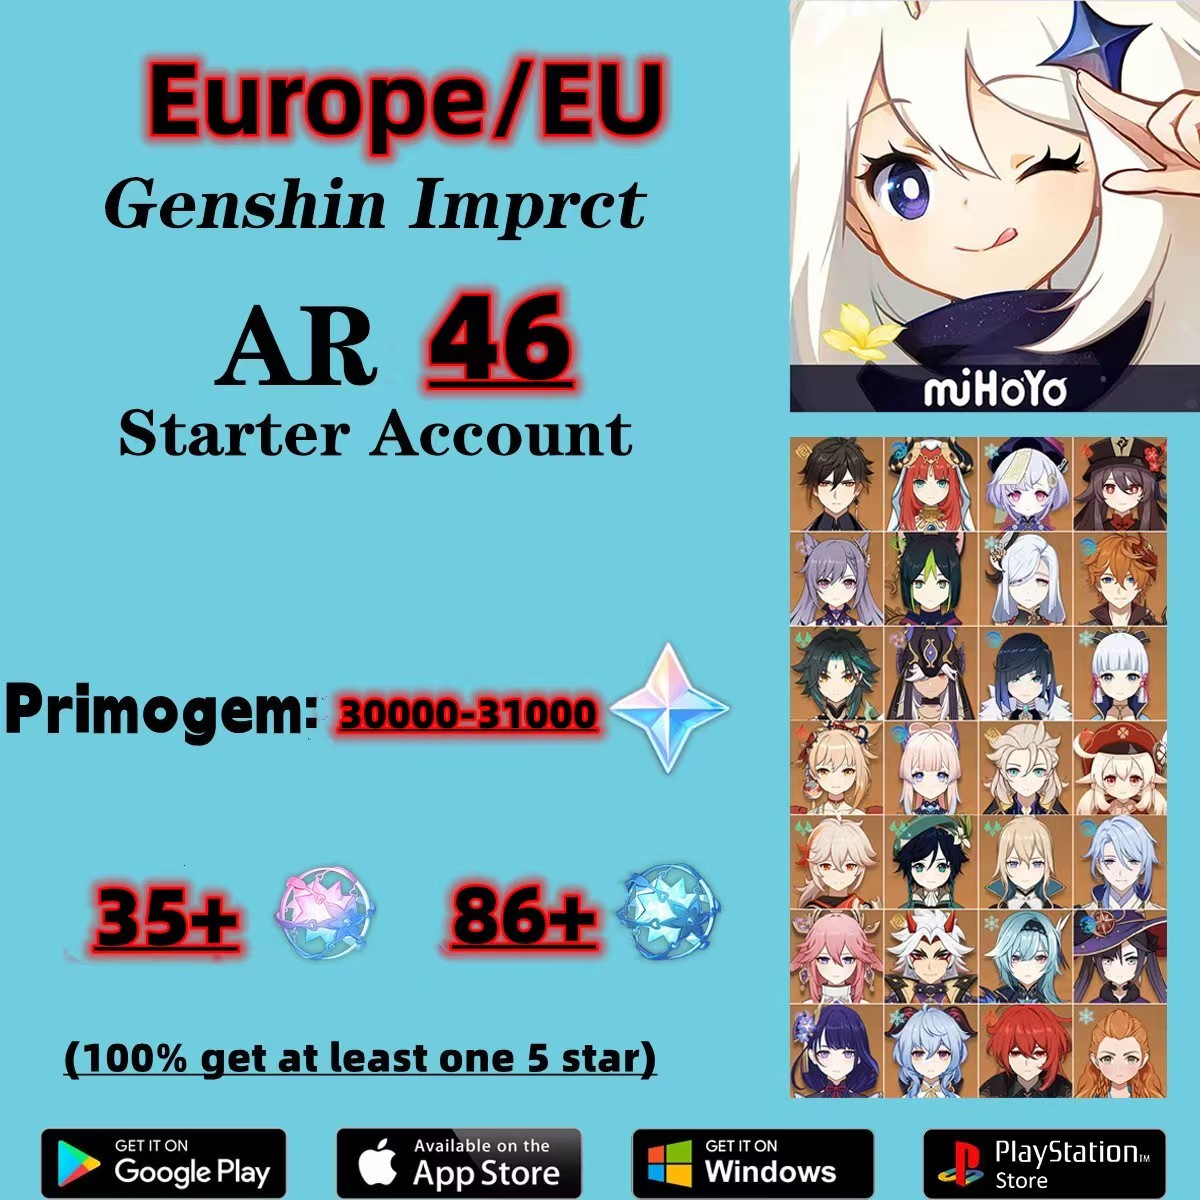 EU|AR46|Guarantee300+Wishes|Genshin Impact account|Primogem30000+|Interwined Fate 35|Acquaint Fate 86/#F59